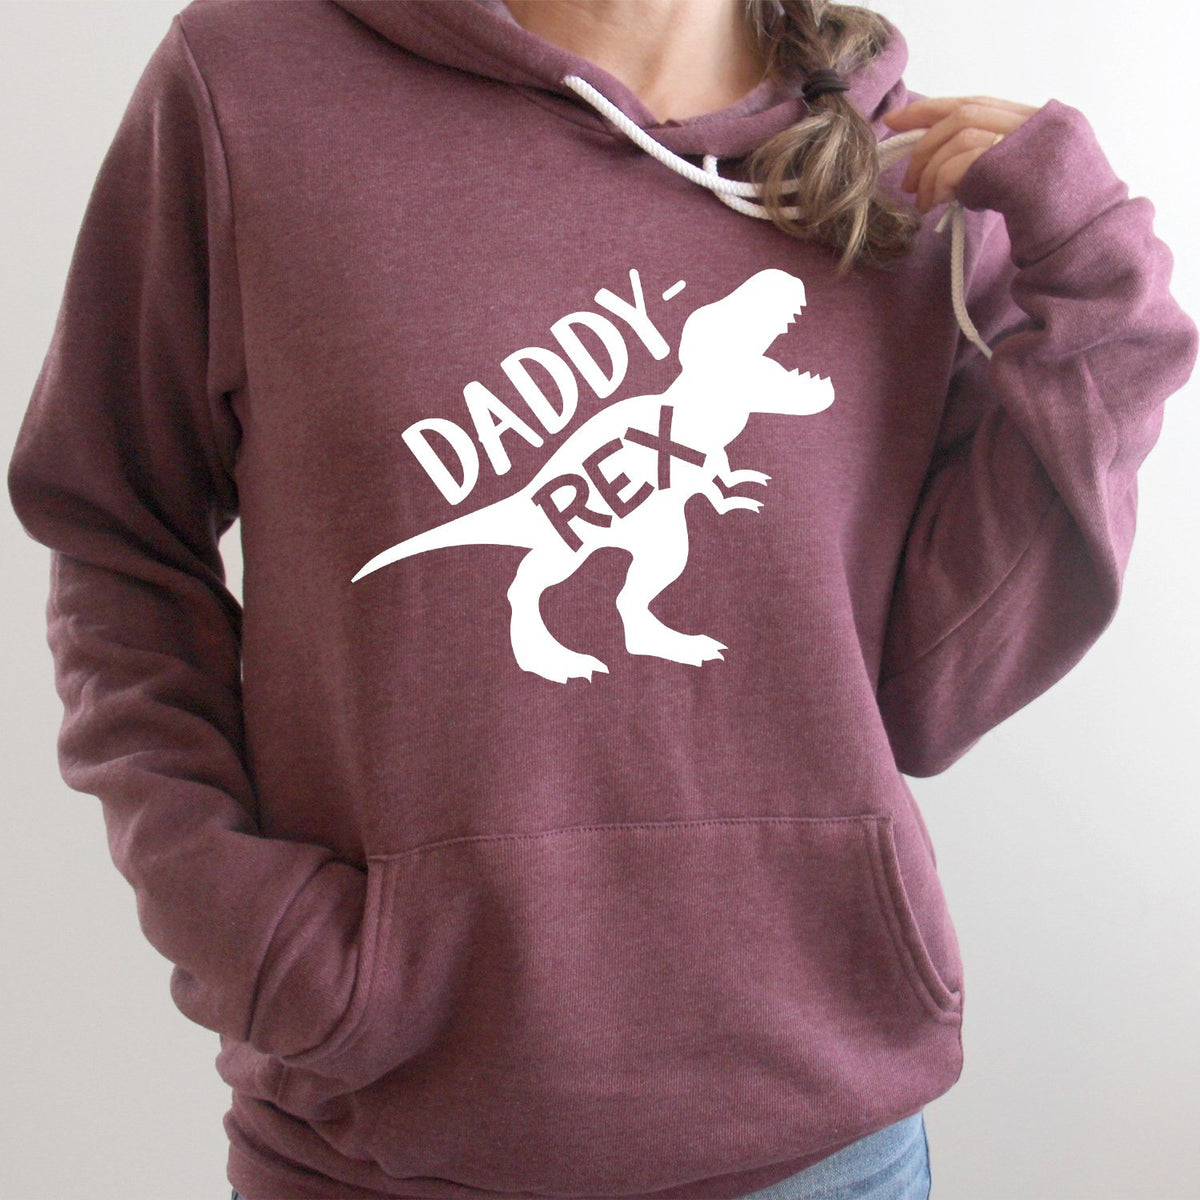 Daddy Rex Dinosaur - Hoodie Sweatshirt